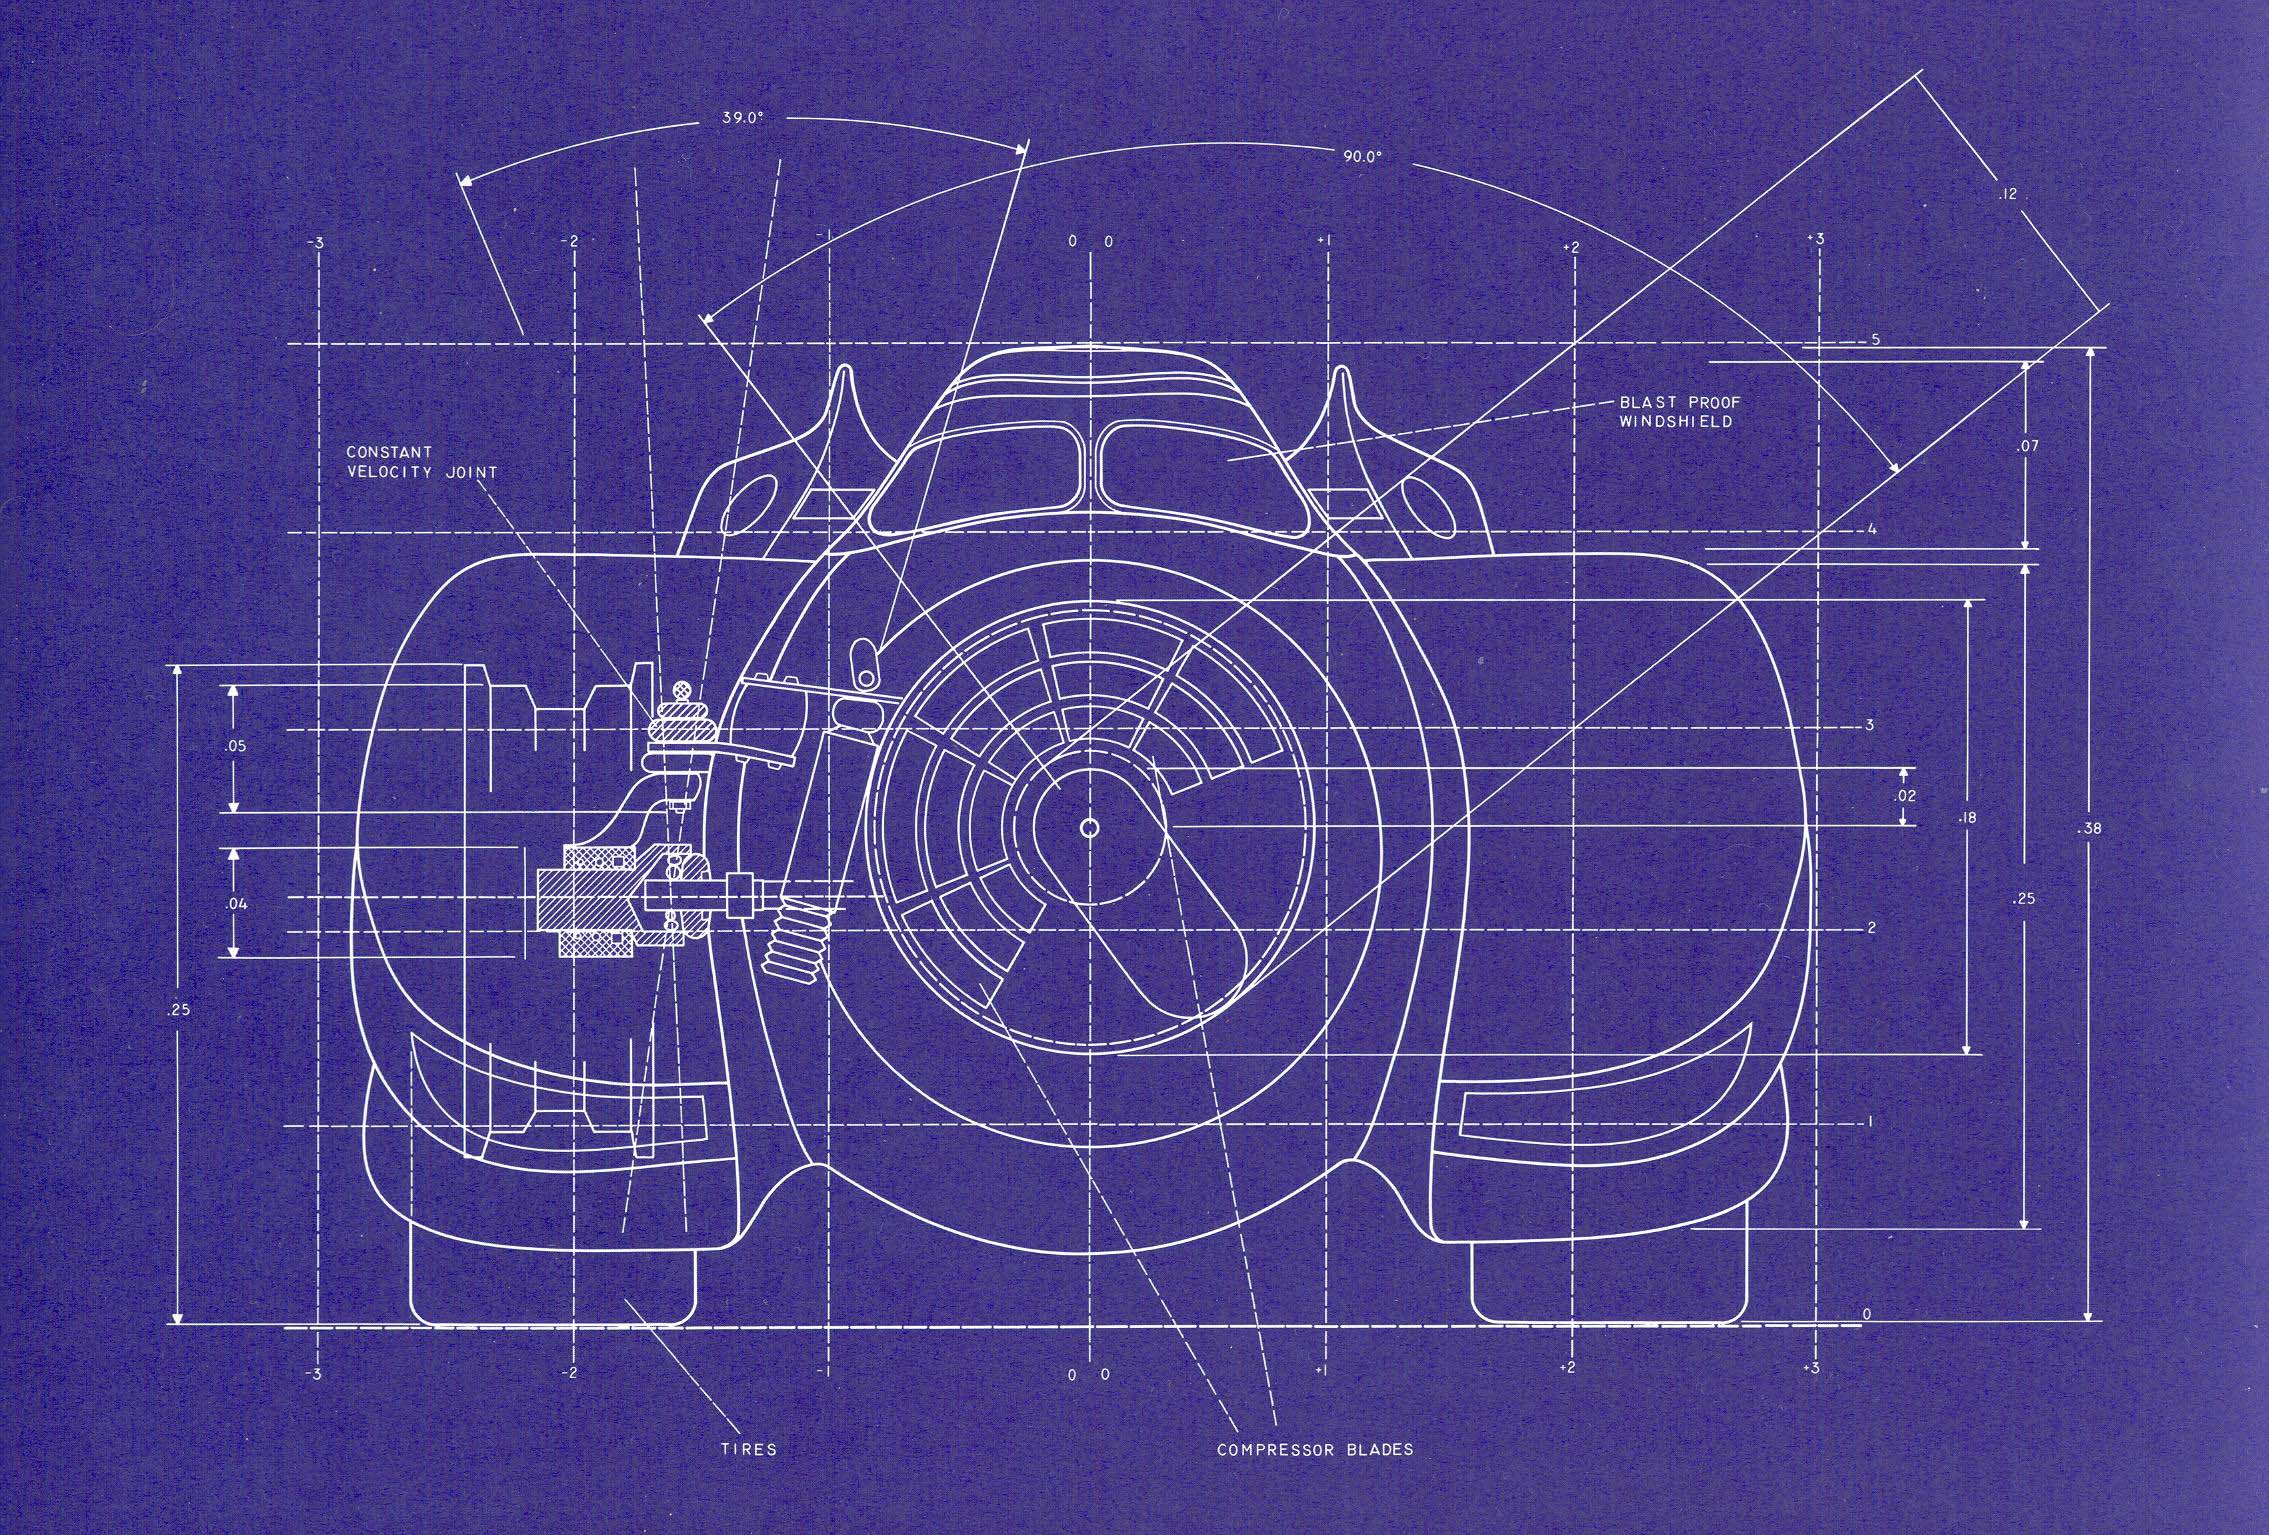 Build Your Own 1989 Batmobile Using These Blueprints - autoevolution